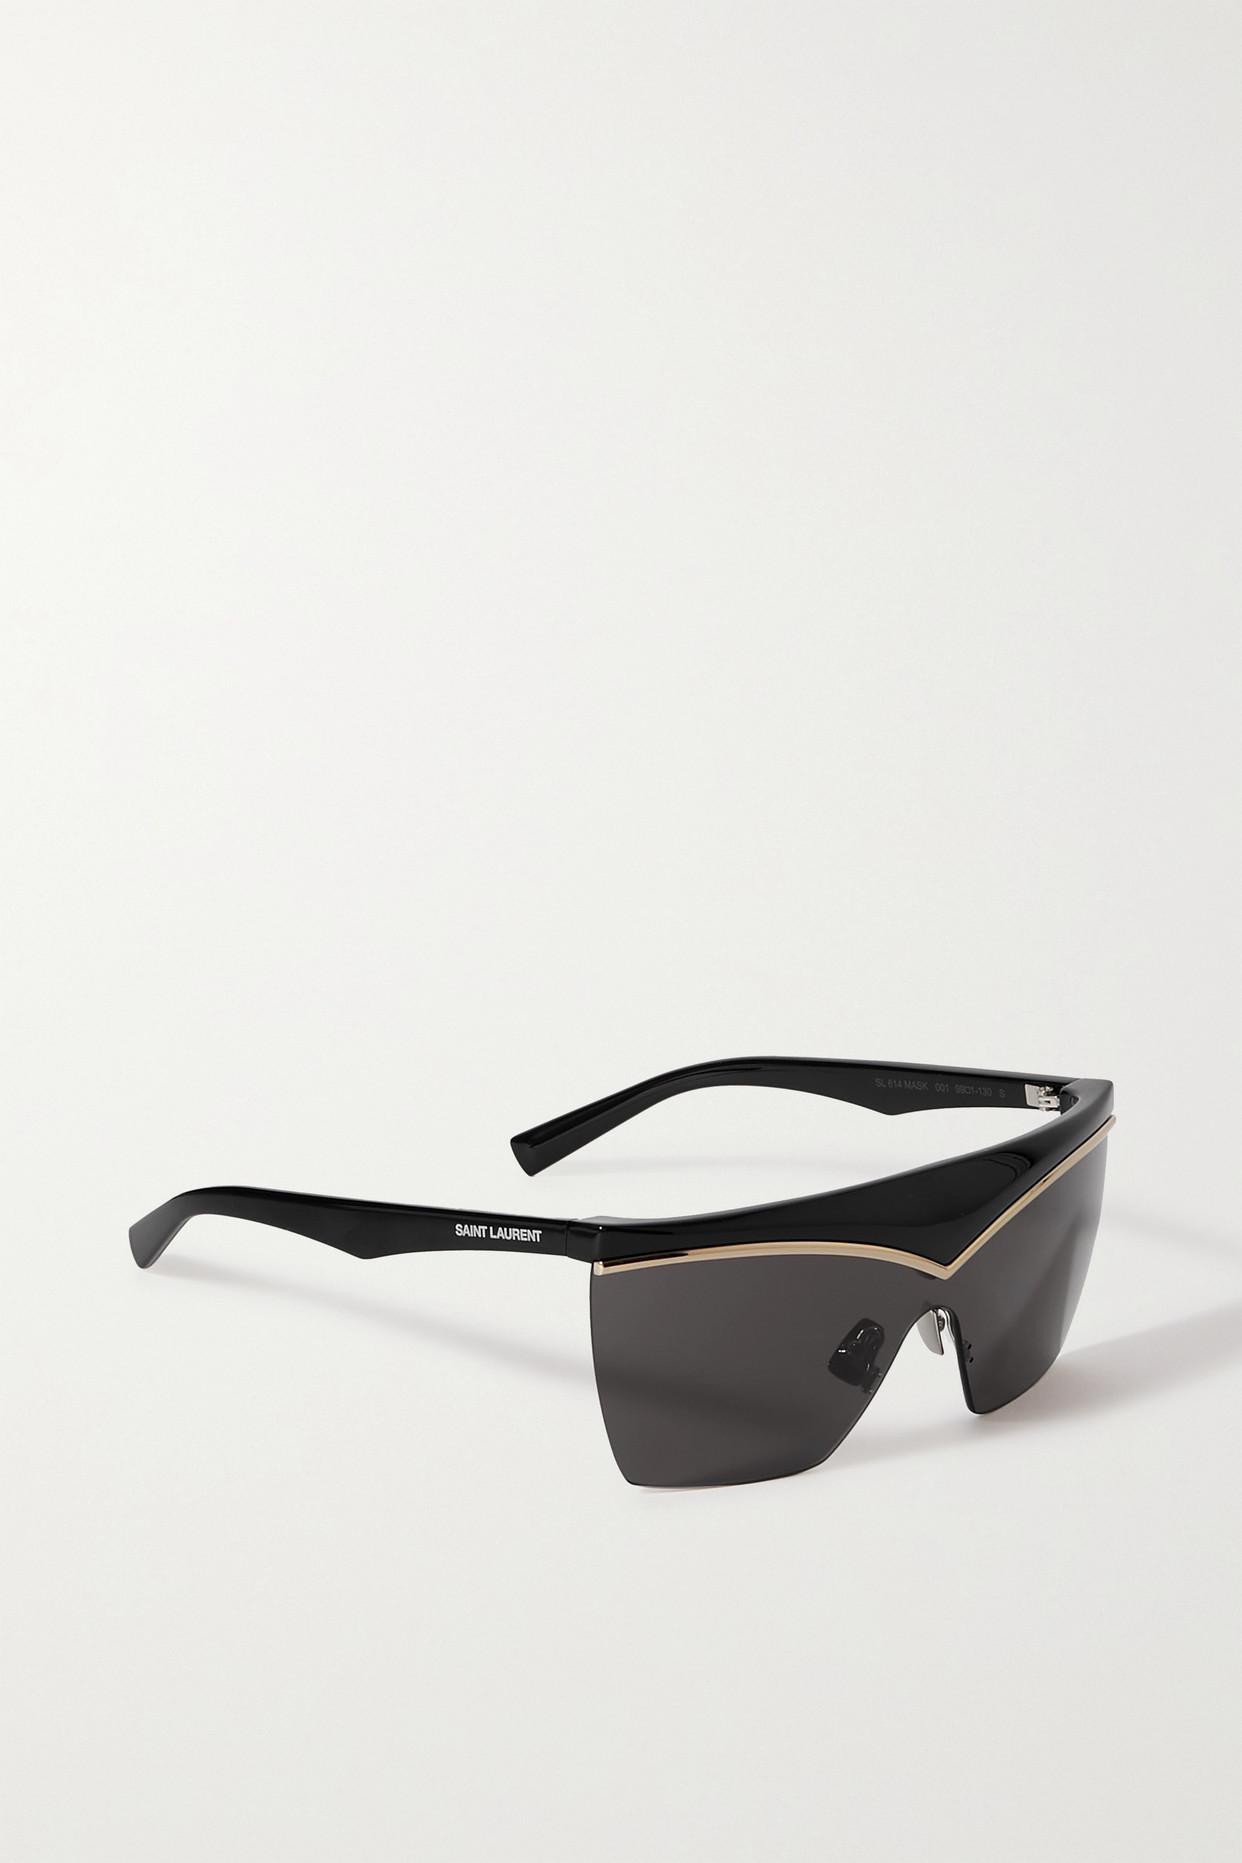 Saint Laurent Eyewear - Ysl Cat-Eye Acetate Sunglasses - Black - One Size - Net A Porter